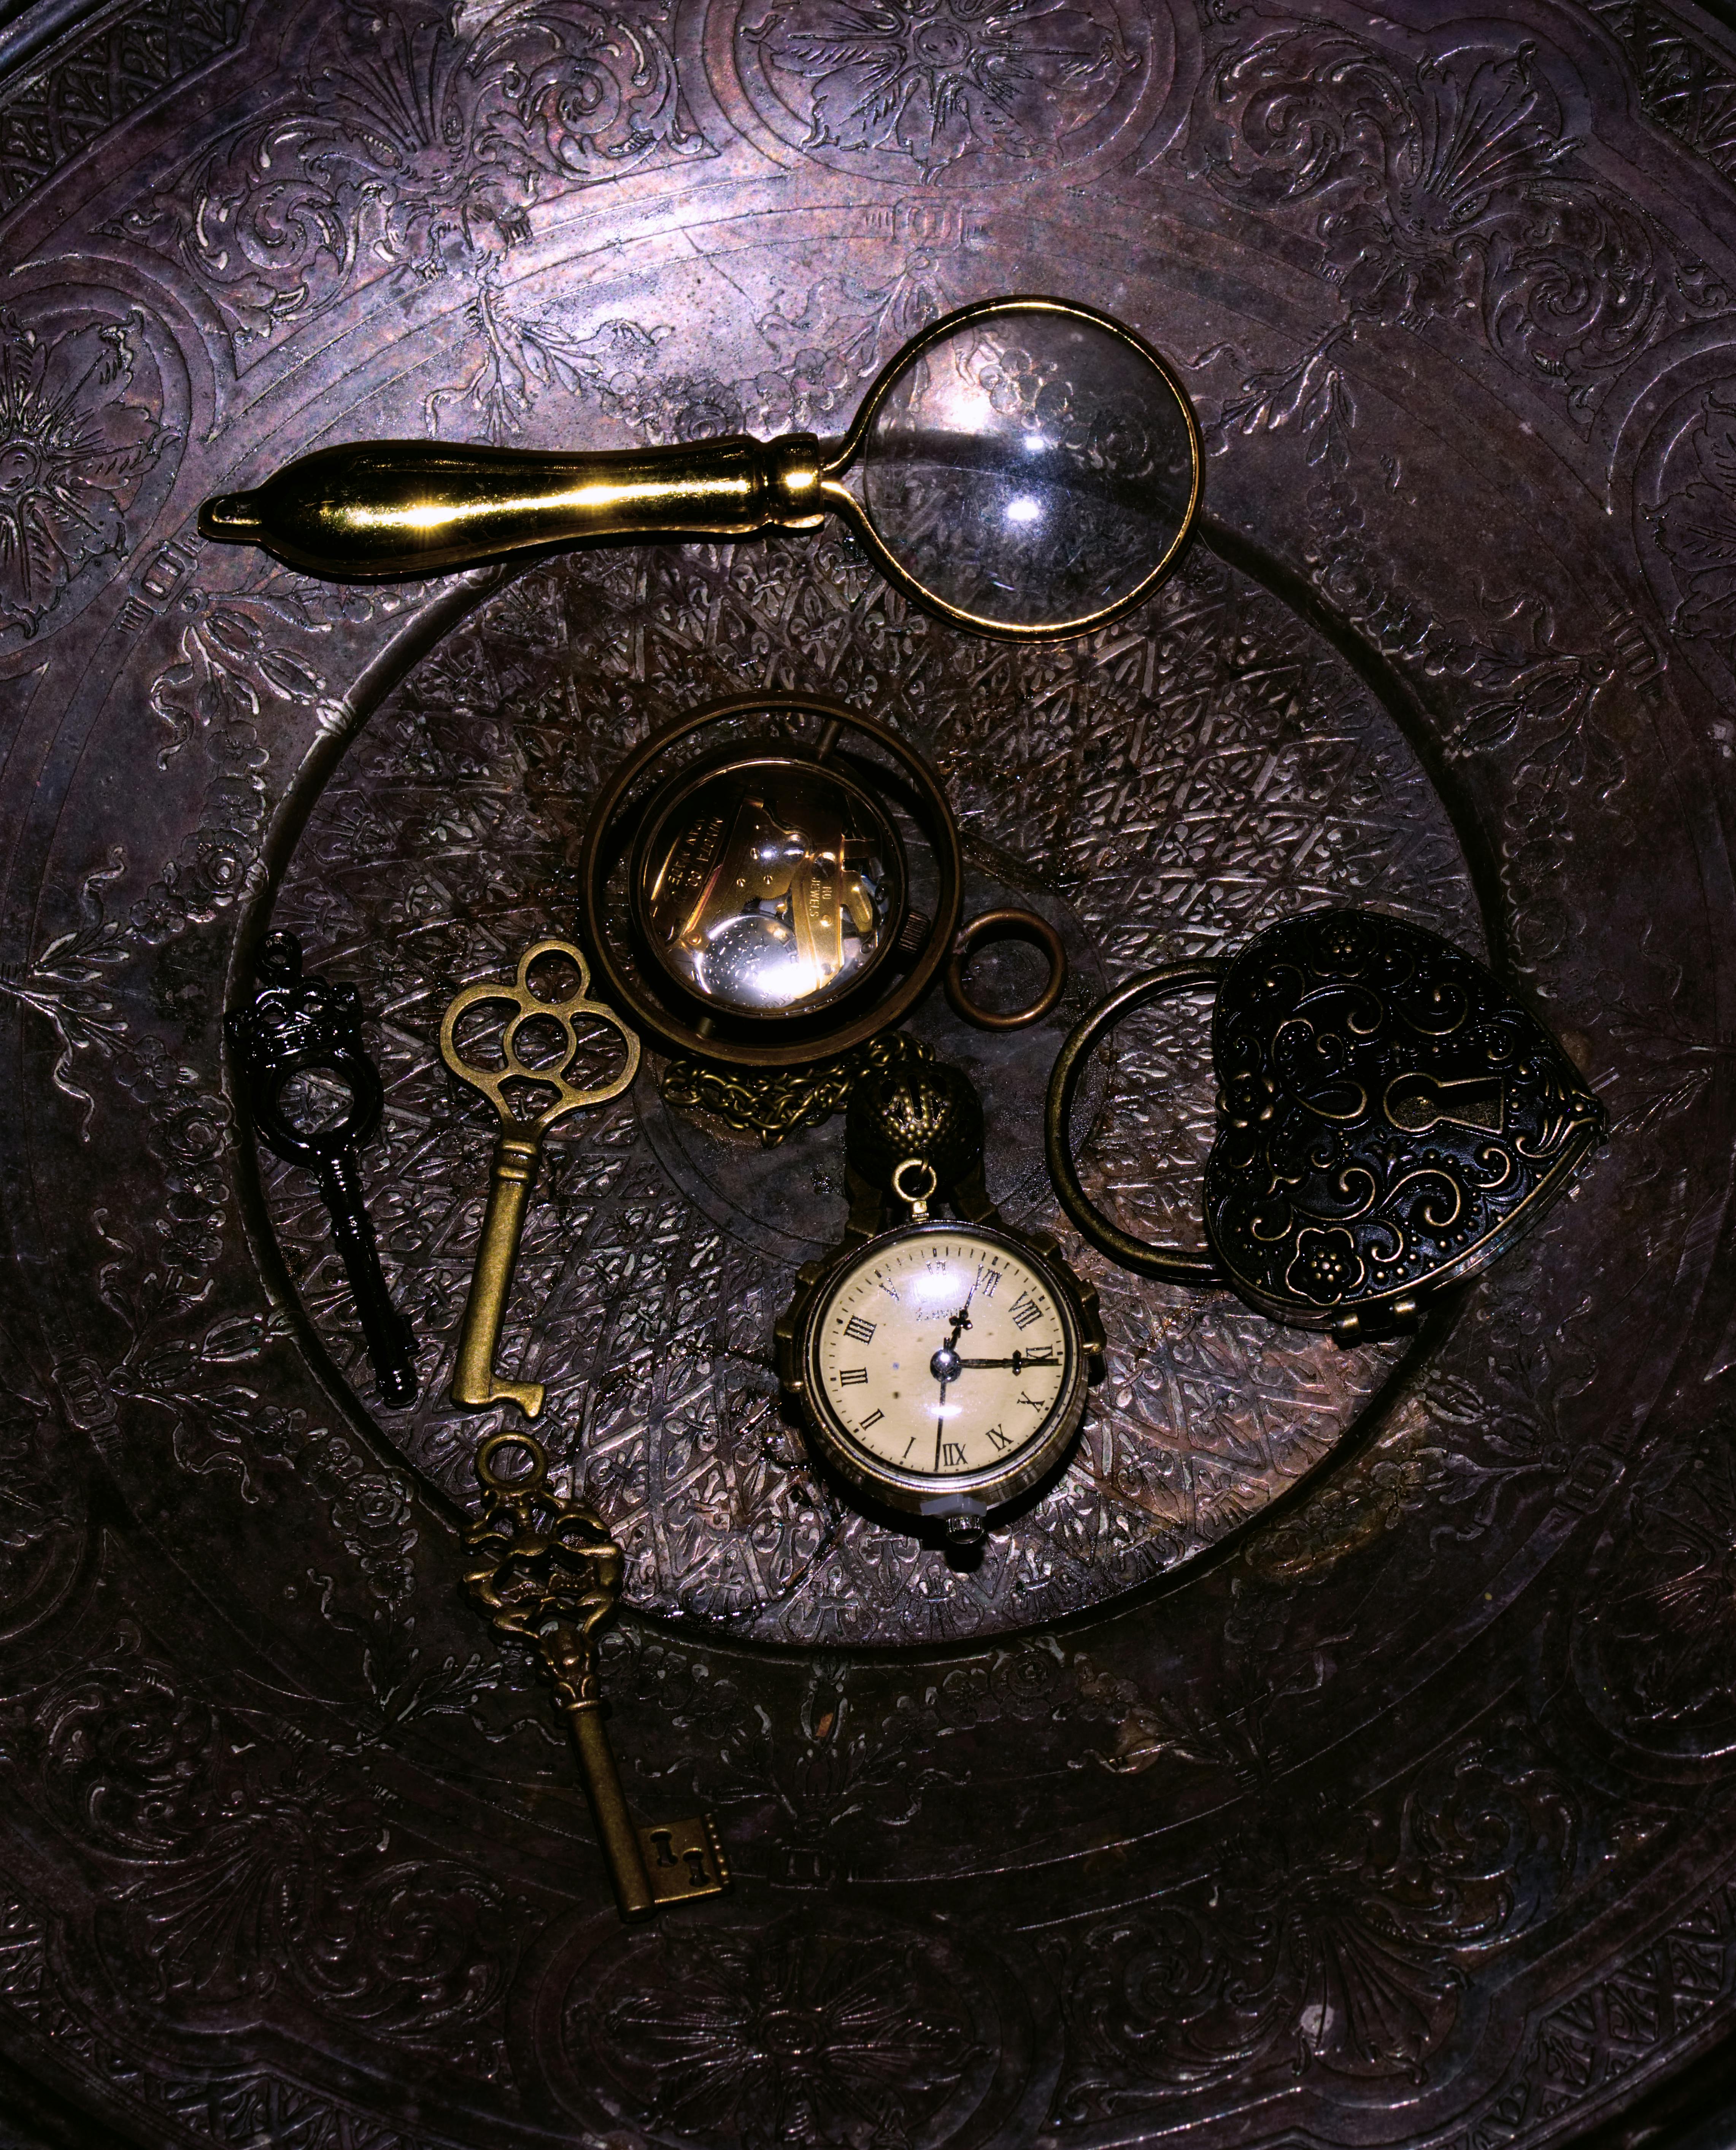 Free stock photo of clocks, gears, keys